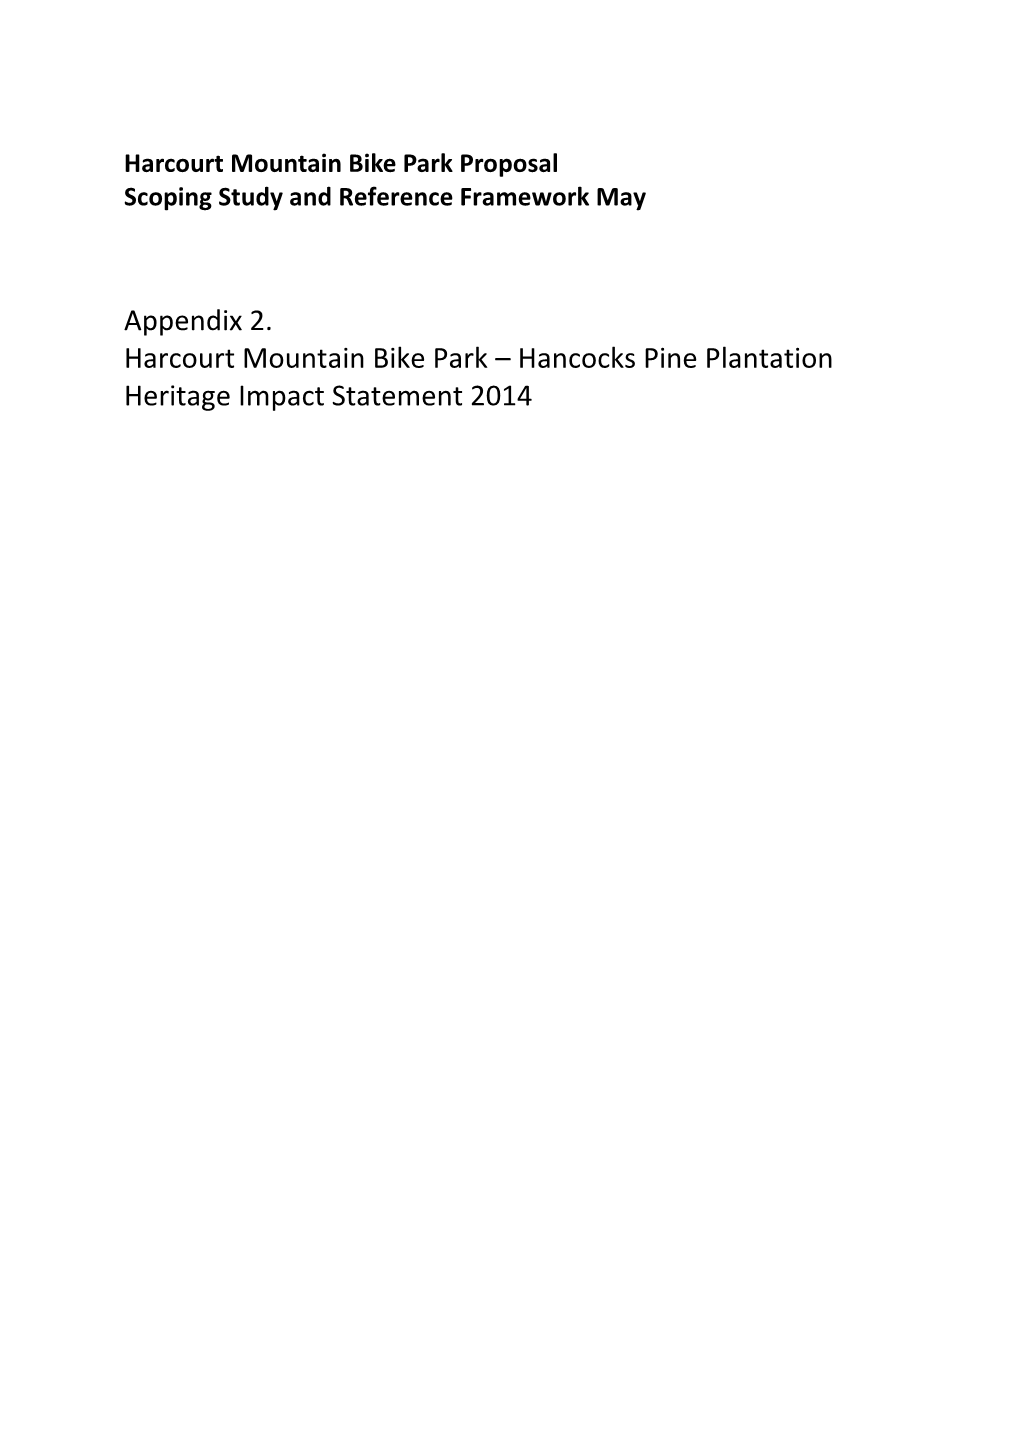 Hancocks Pine Plantation Heritage Impact Statement 2014 HERITAGE IMPACT STATEMENT –DESKTOP STUDY